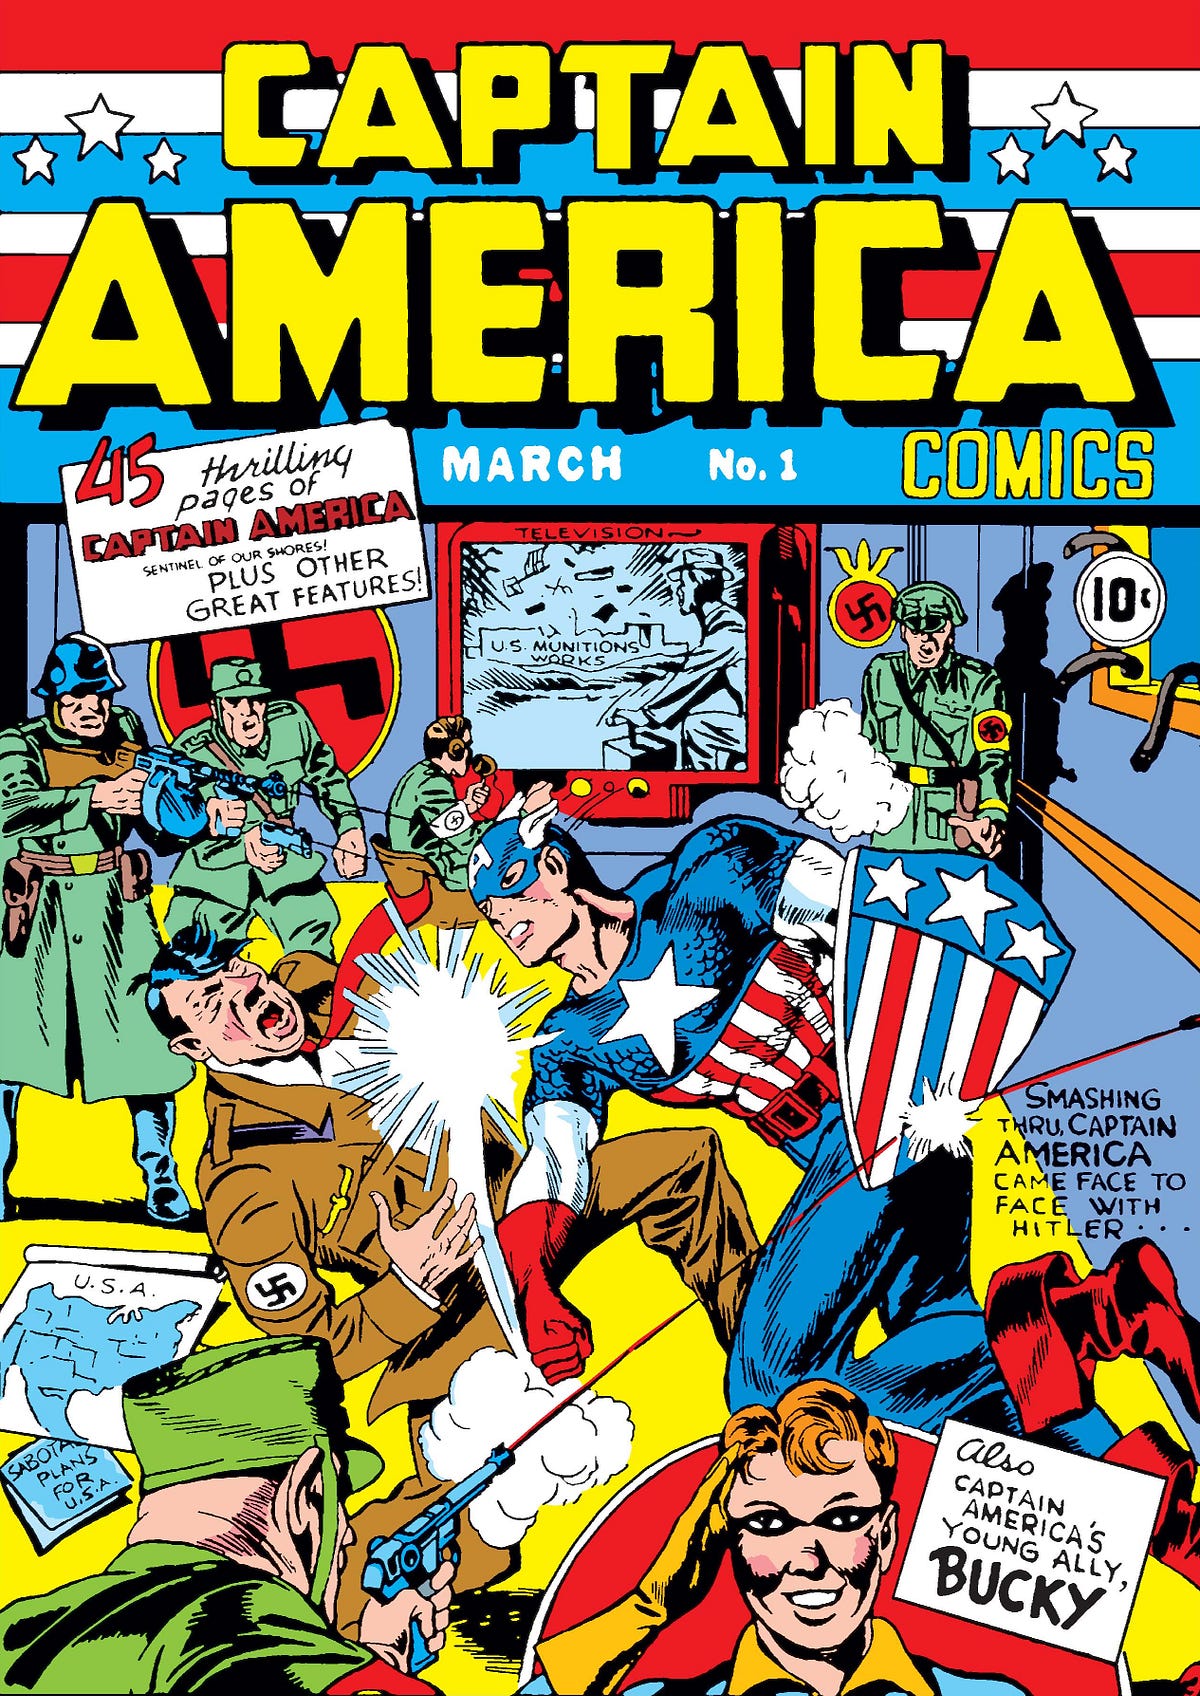 Captain America: Still Fighting Nazis, 77 Years Later